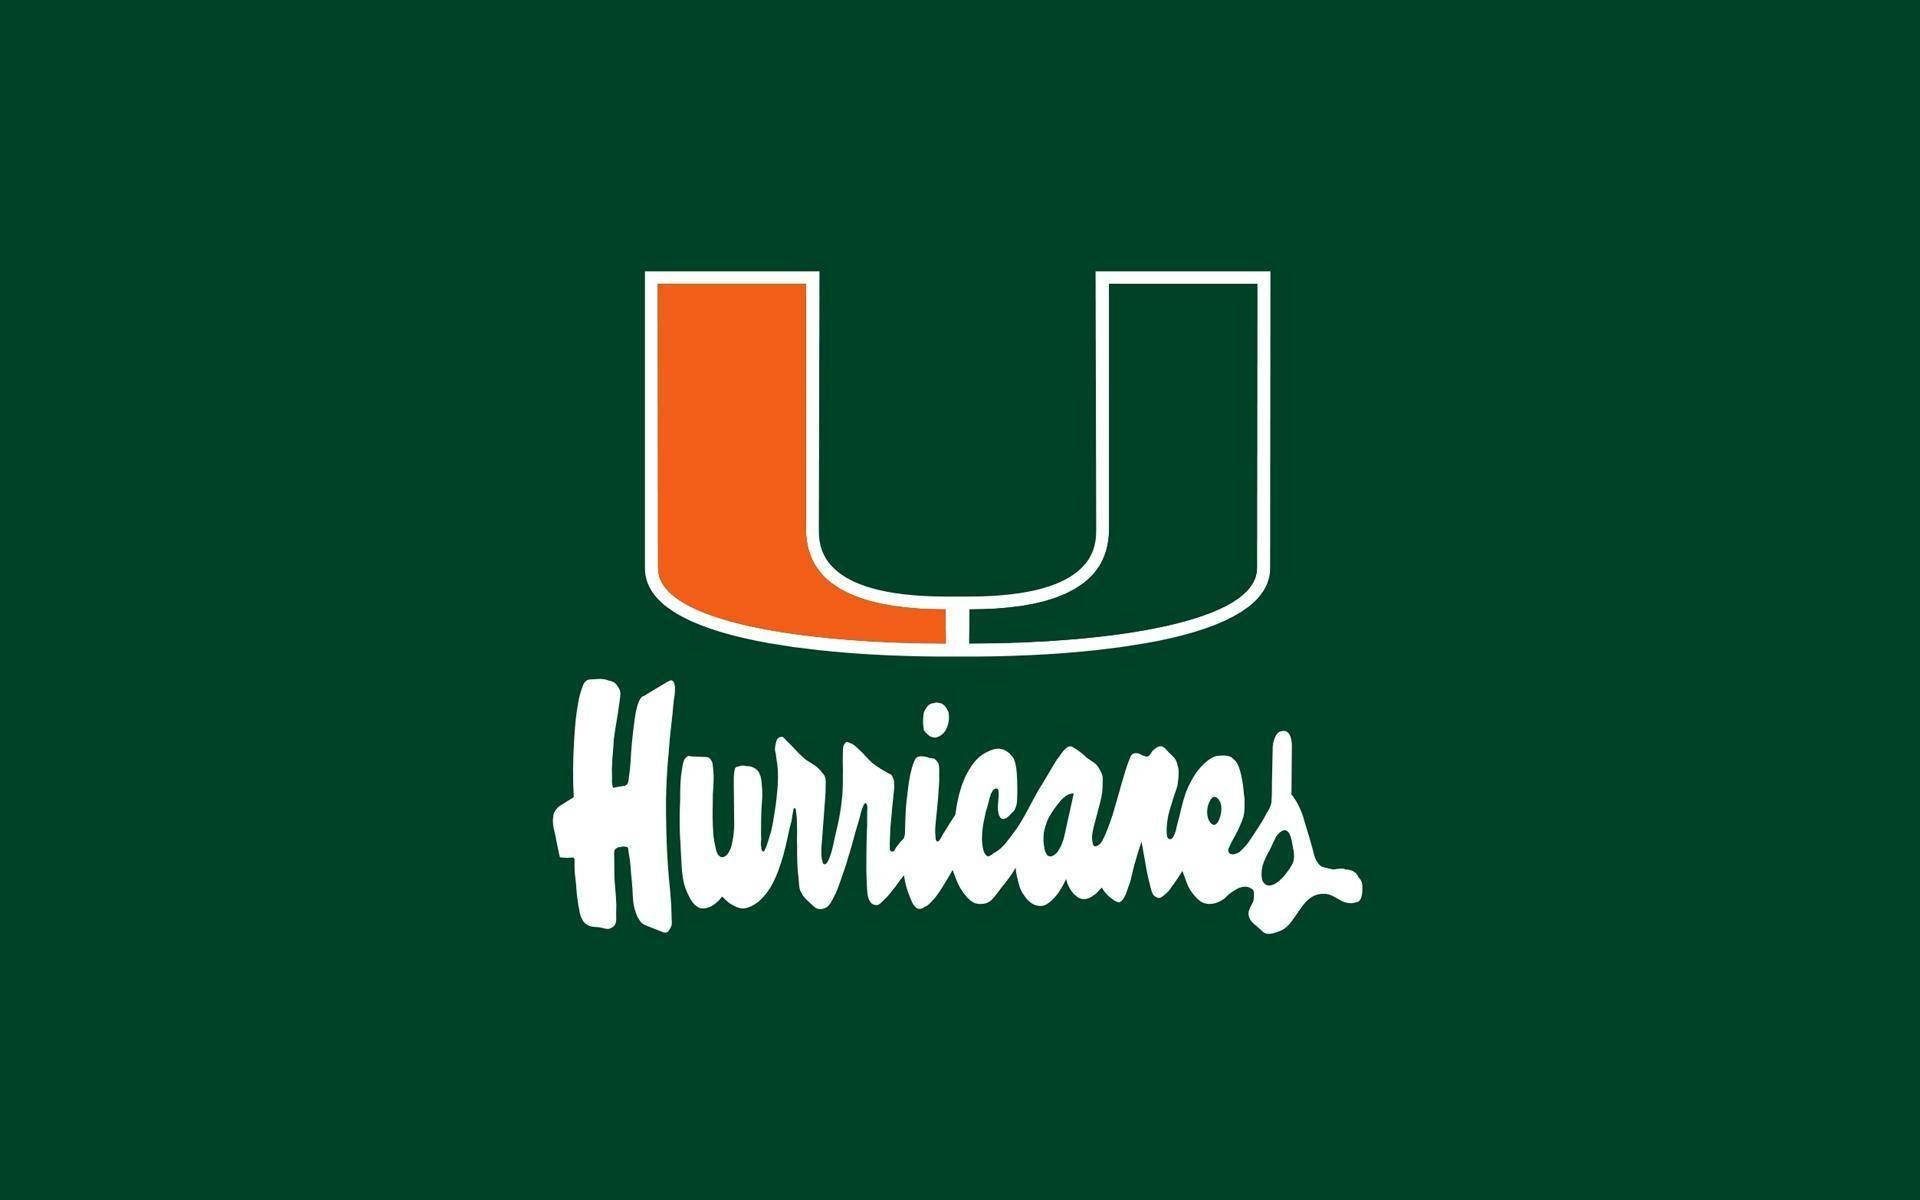 miami hurricanes logo